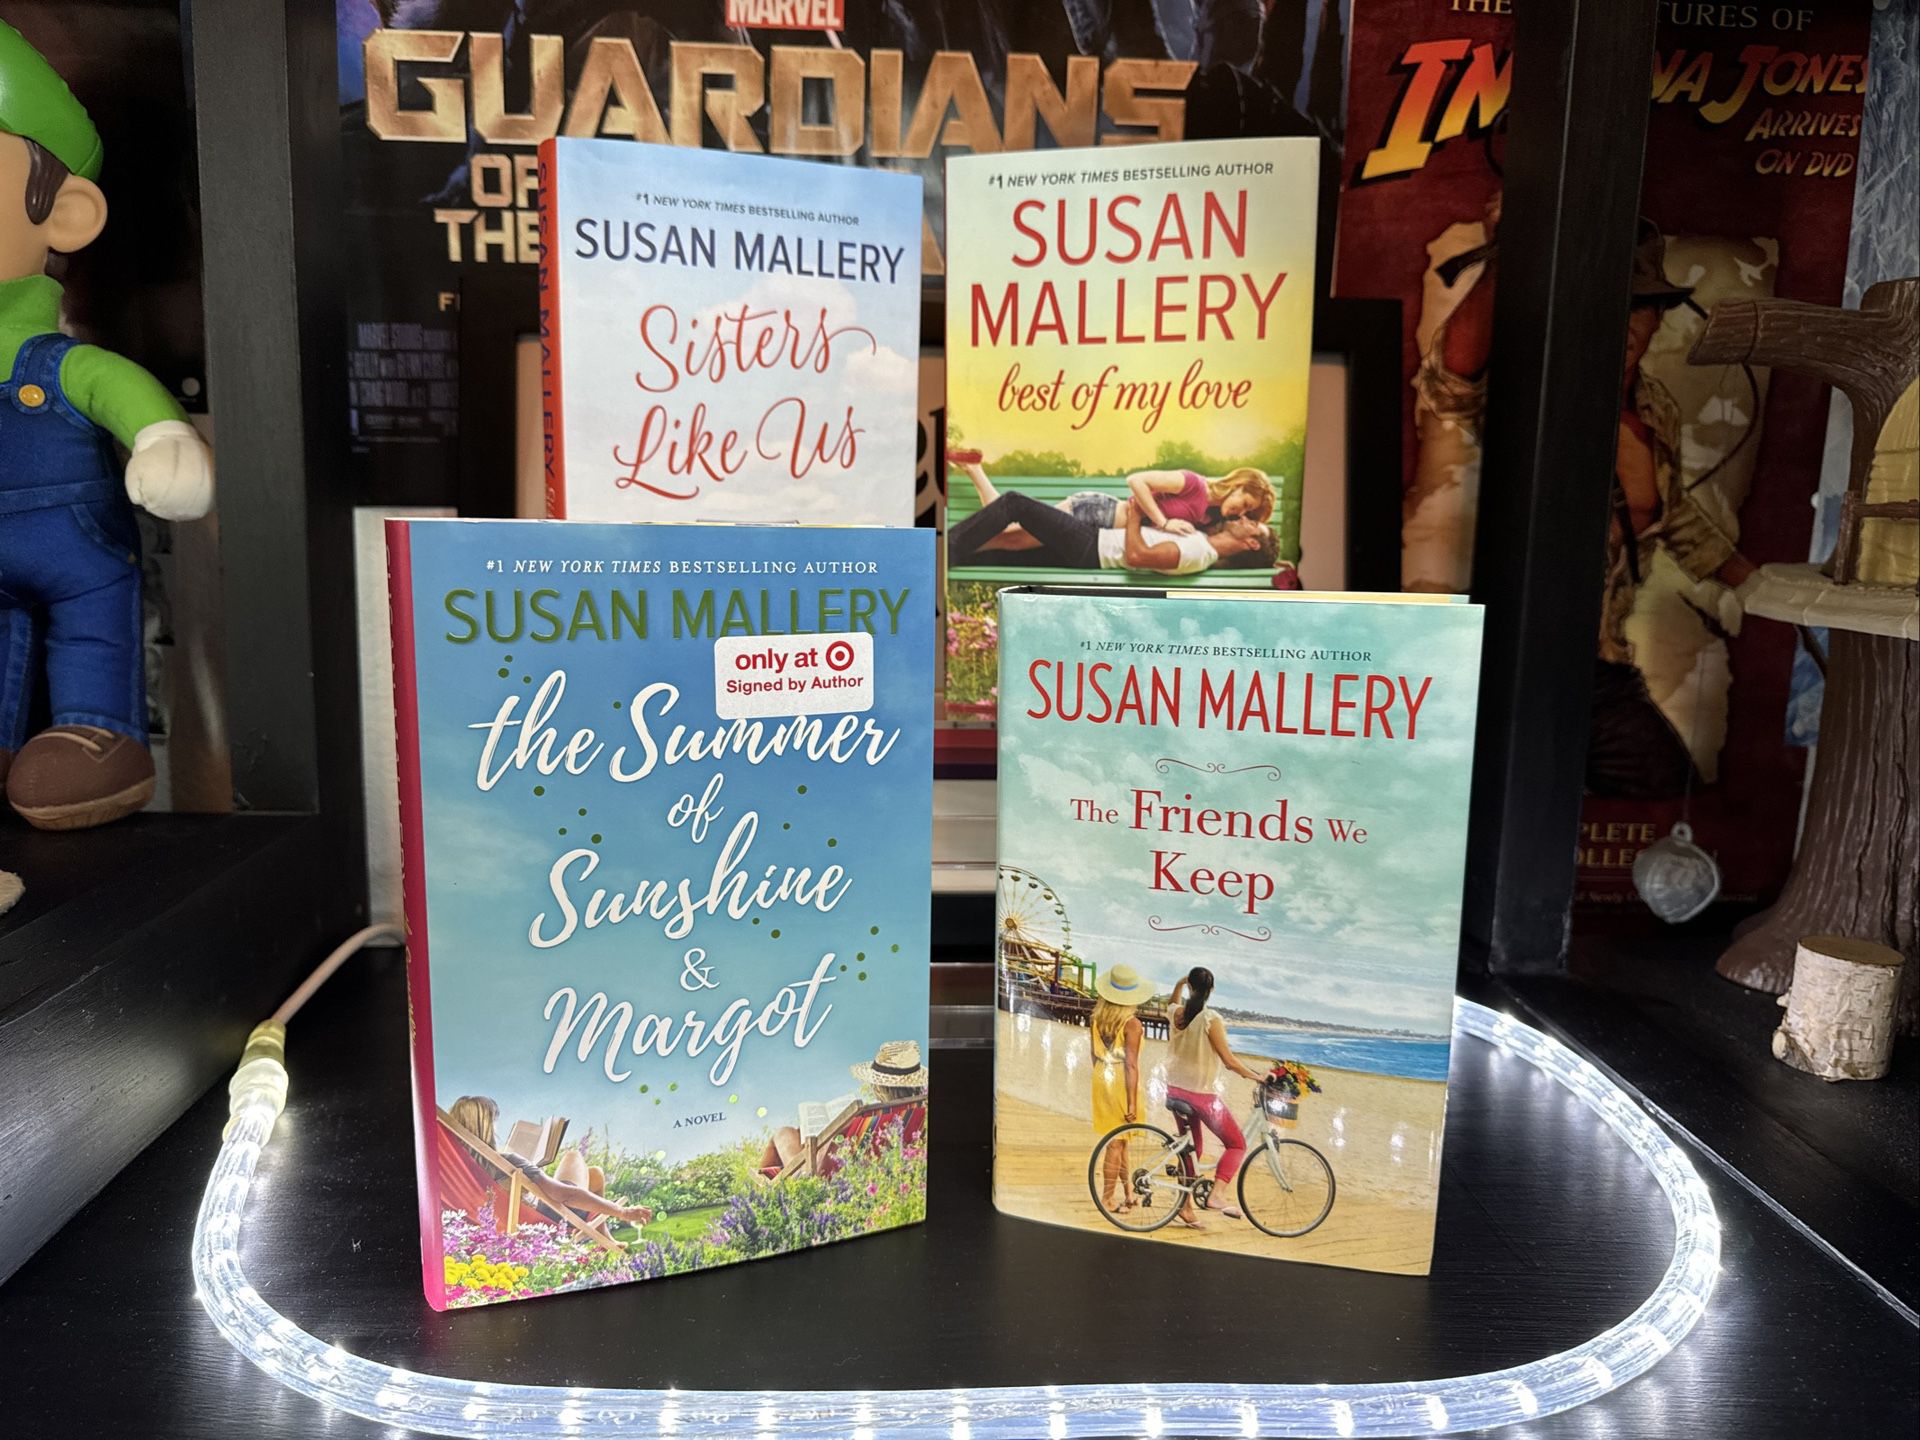 Susan Mallory Hardcover Novels Lot 4 Women’s Fiction Romance Signed Author VG+